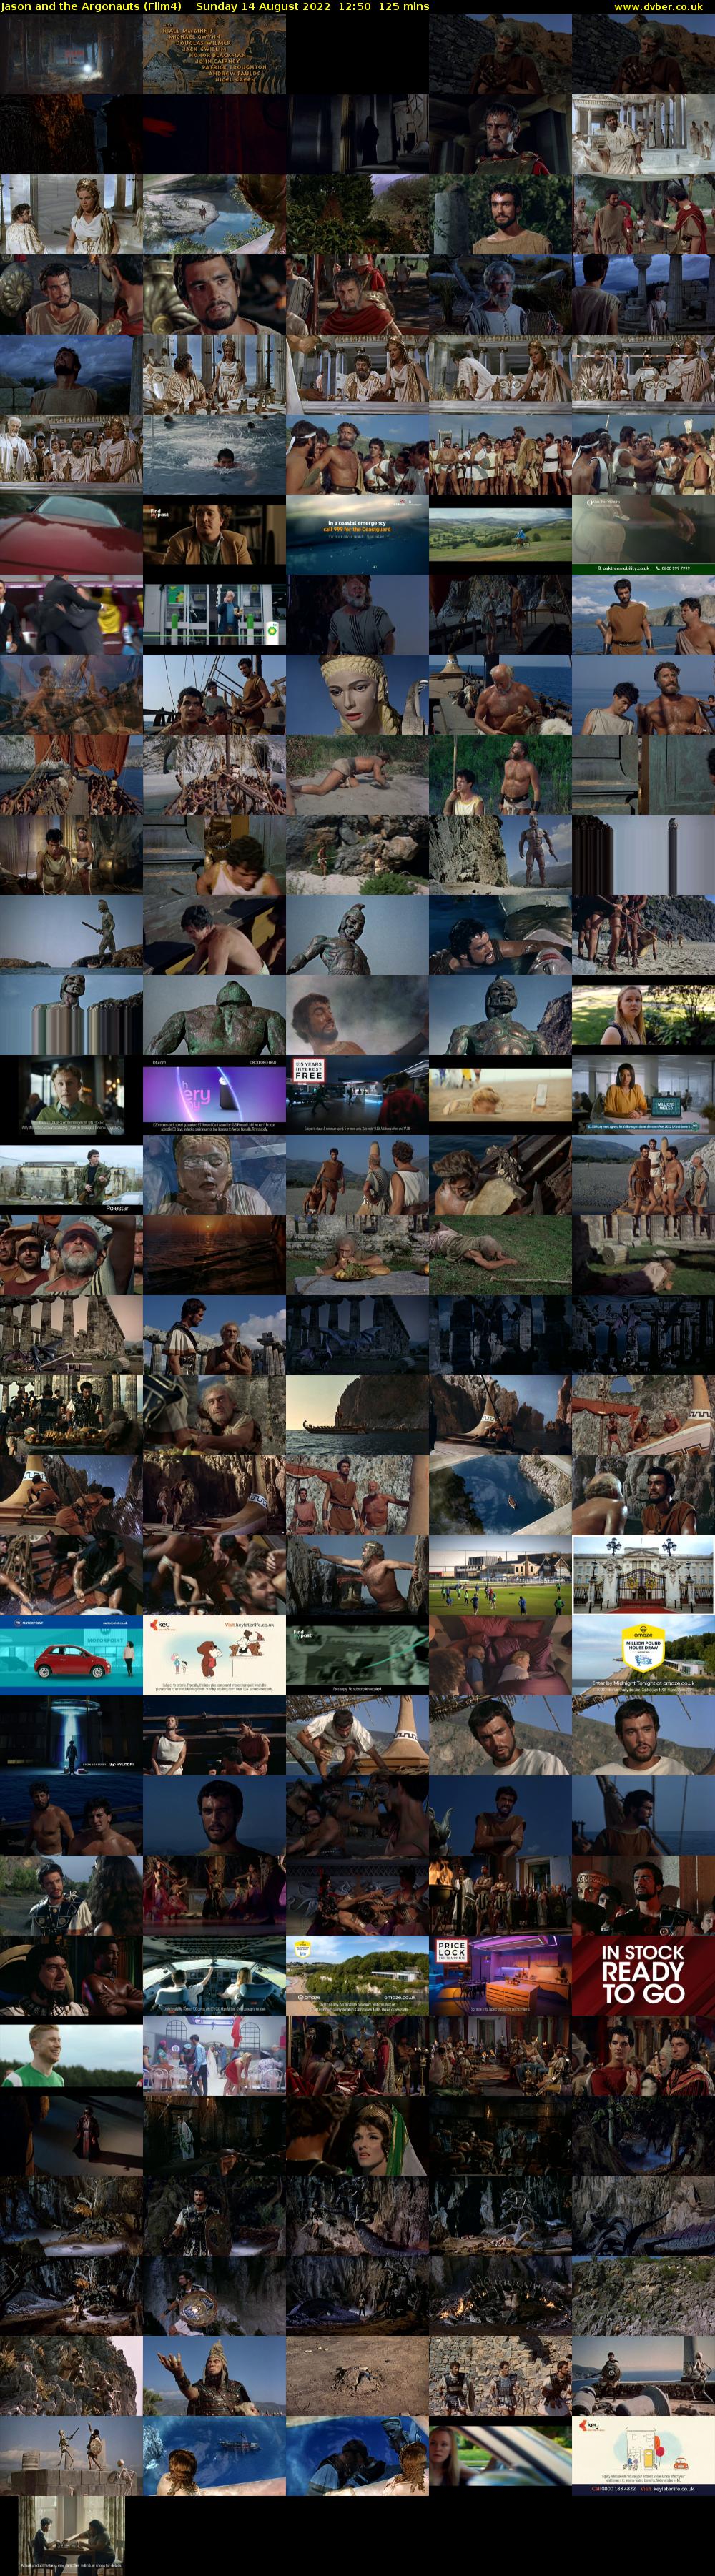 Jason and the Argonauts (Film4) Sunday 14 August 2022 12:50 - 14:55